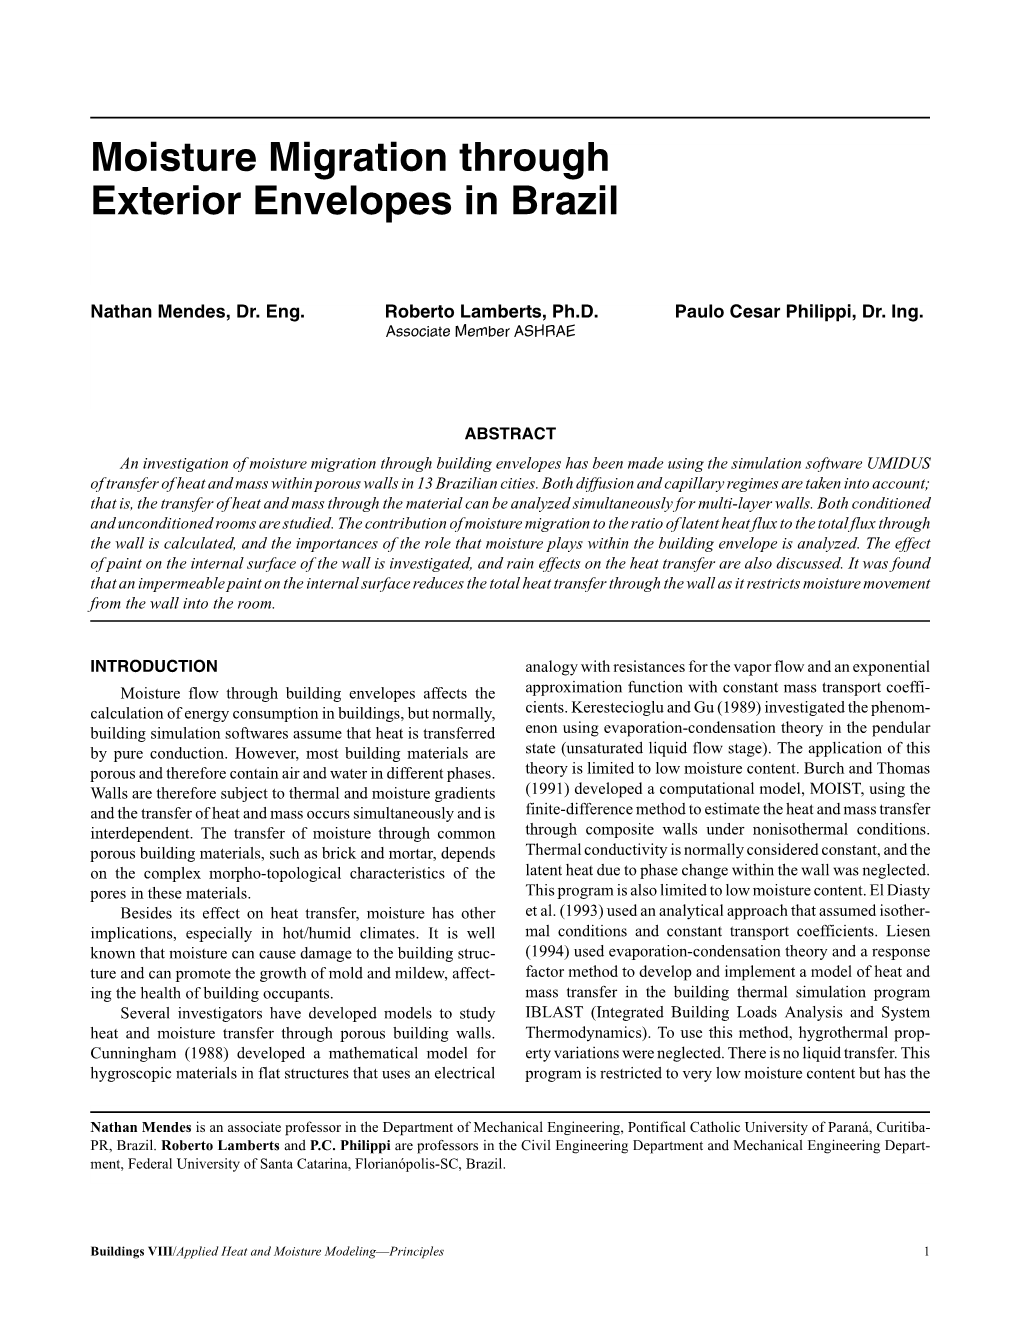 Moisture Migration Through Exterior Envelopes in Brazil